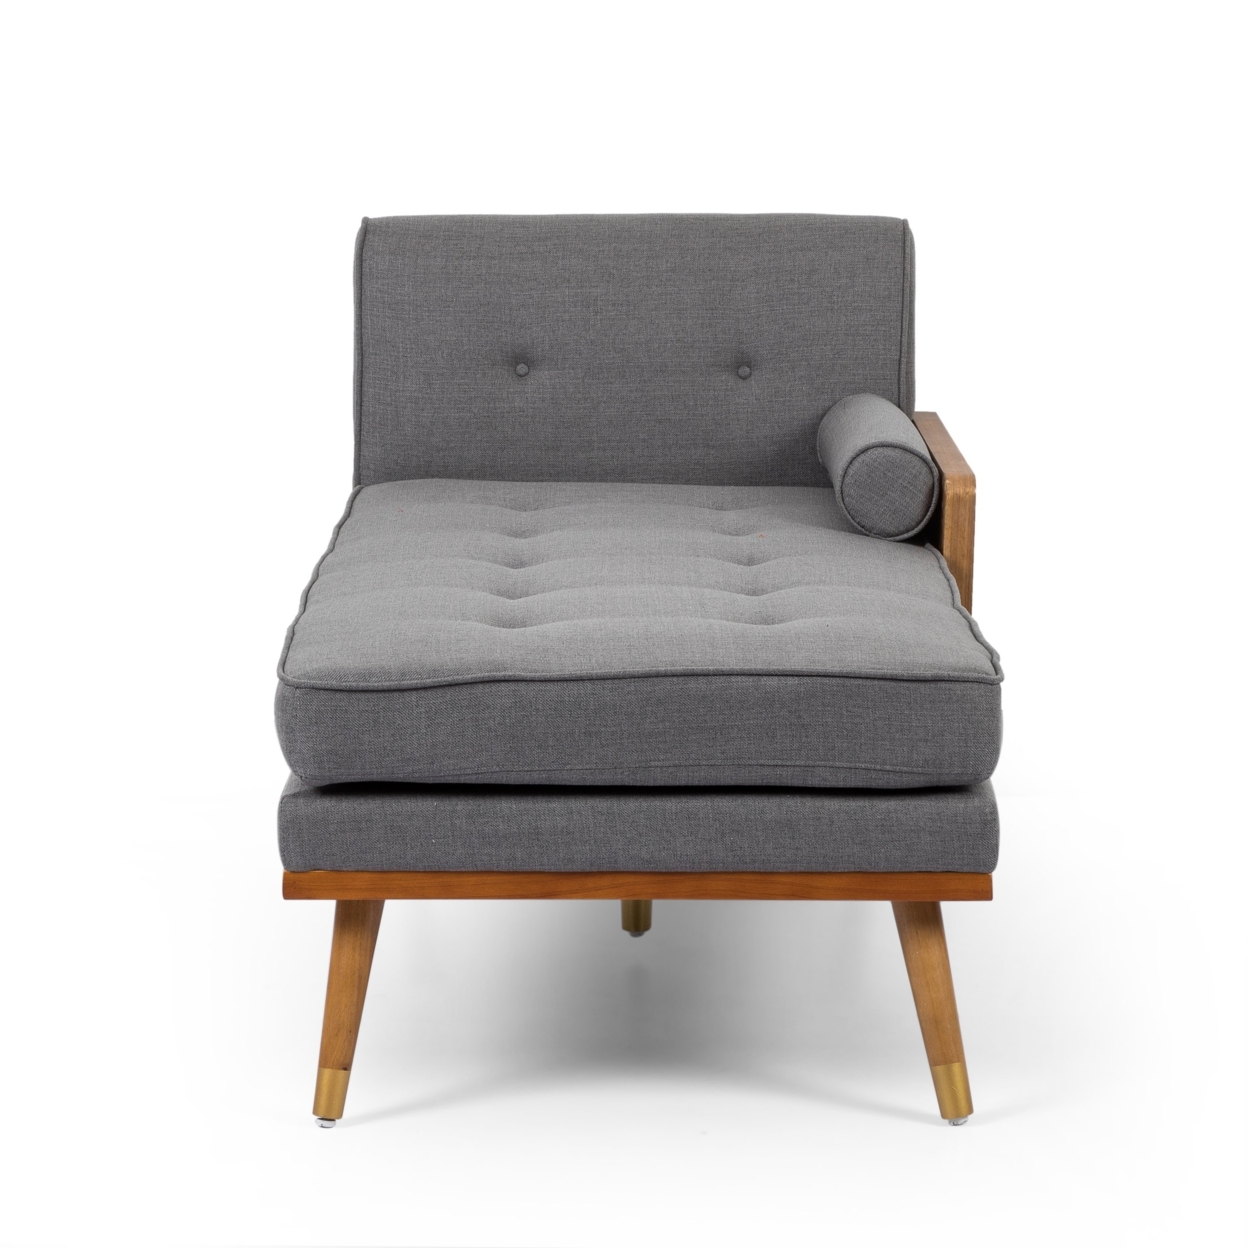 Yaretsi Mid-Century Modern Fabric Chaise Sectional - Gray